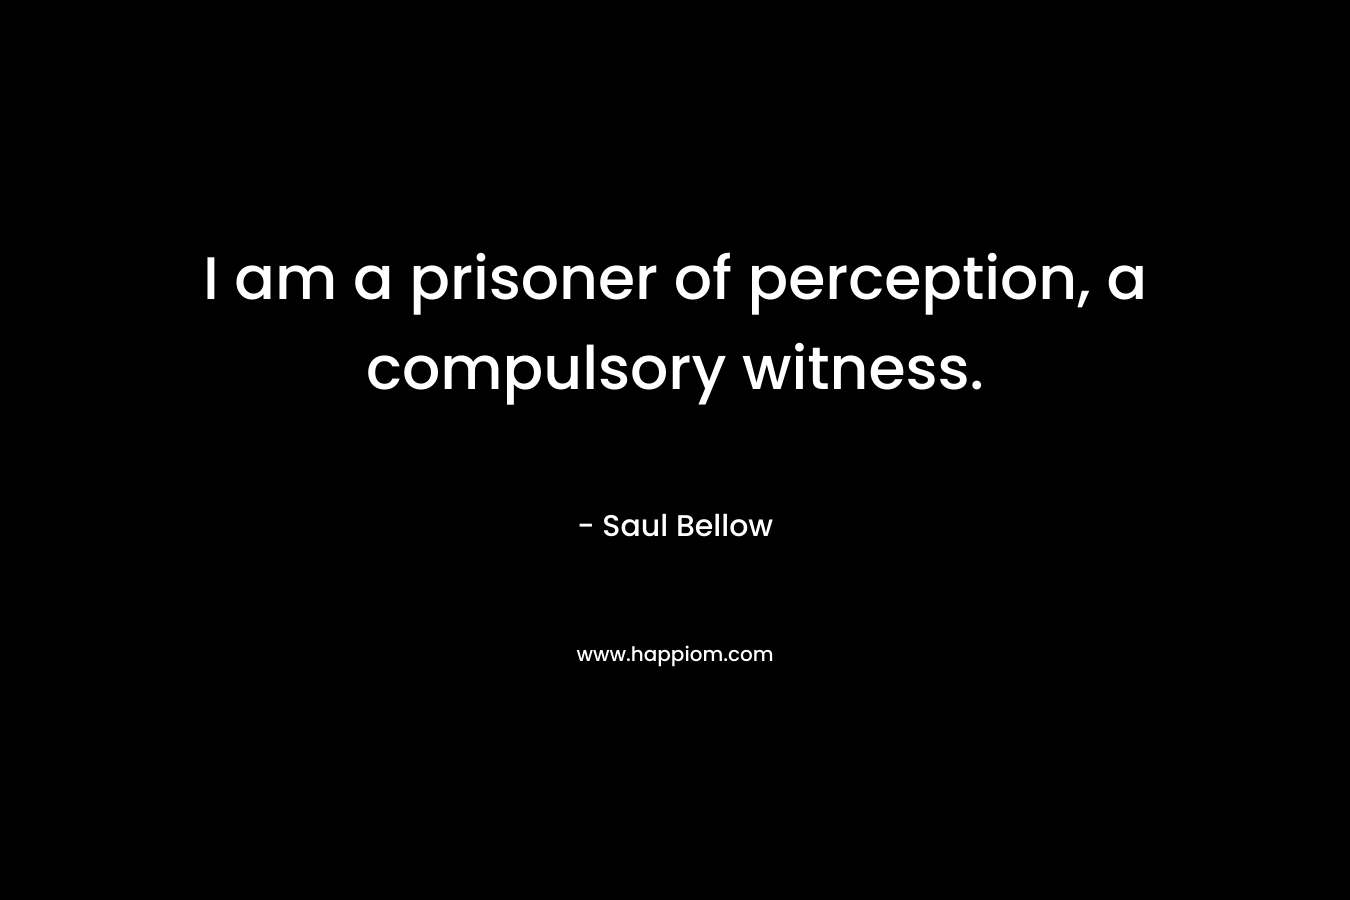 I am a prisoner of perception, a compulsory witness.